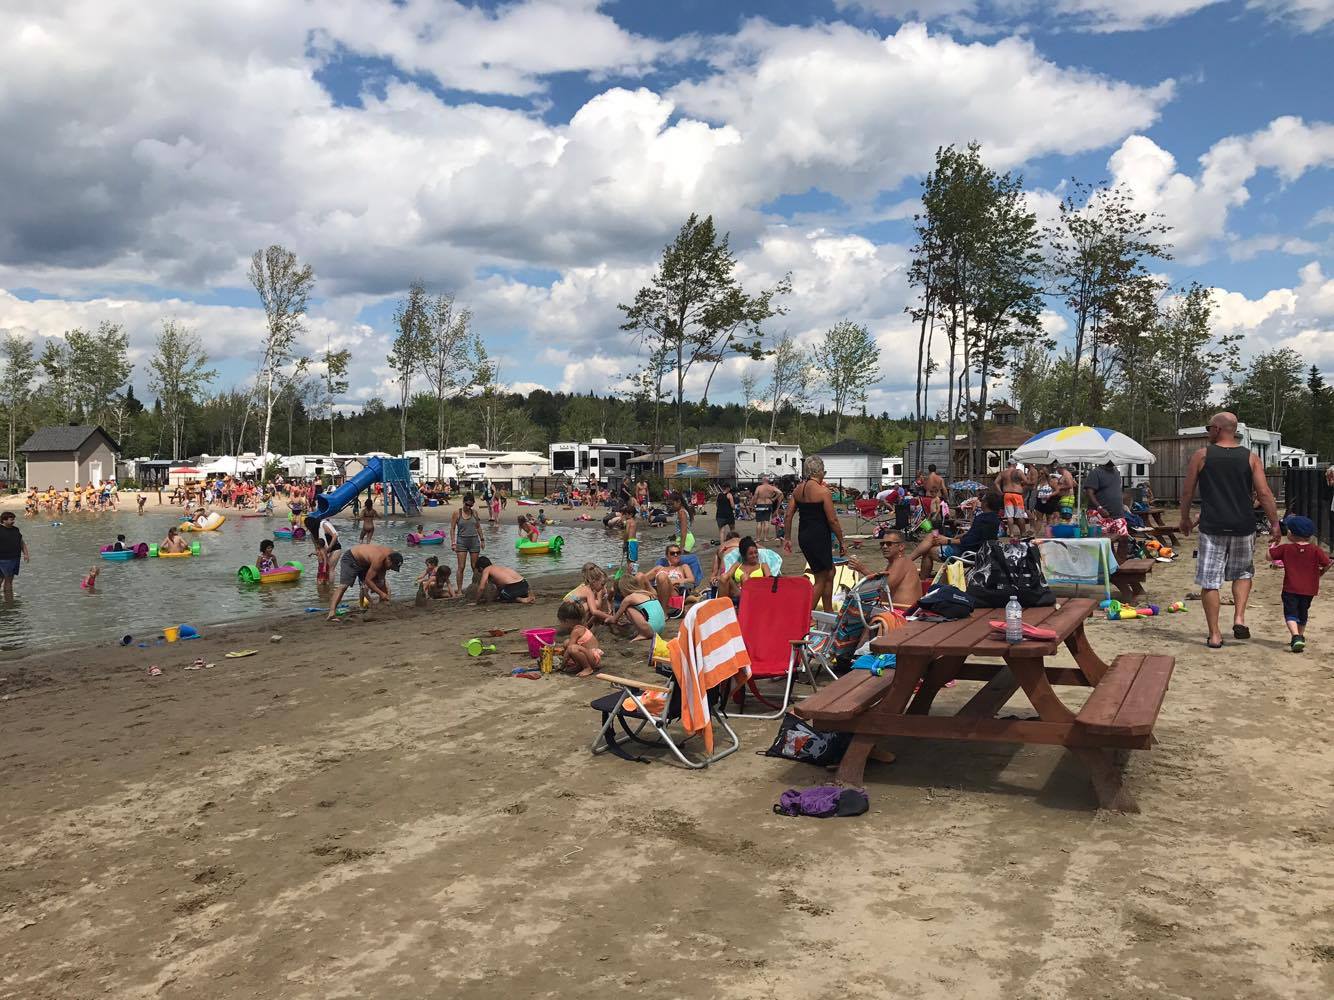 https://www.campingatlantide.com/wp-content/uploads/2017/08/beach-party-2017-complexe-atlantide-15.jpg